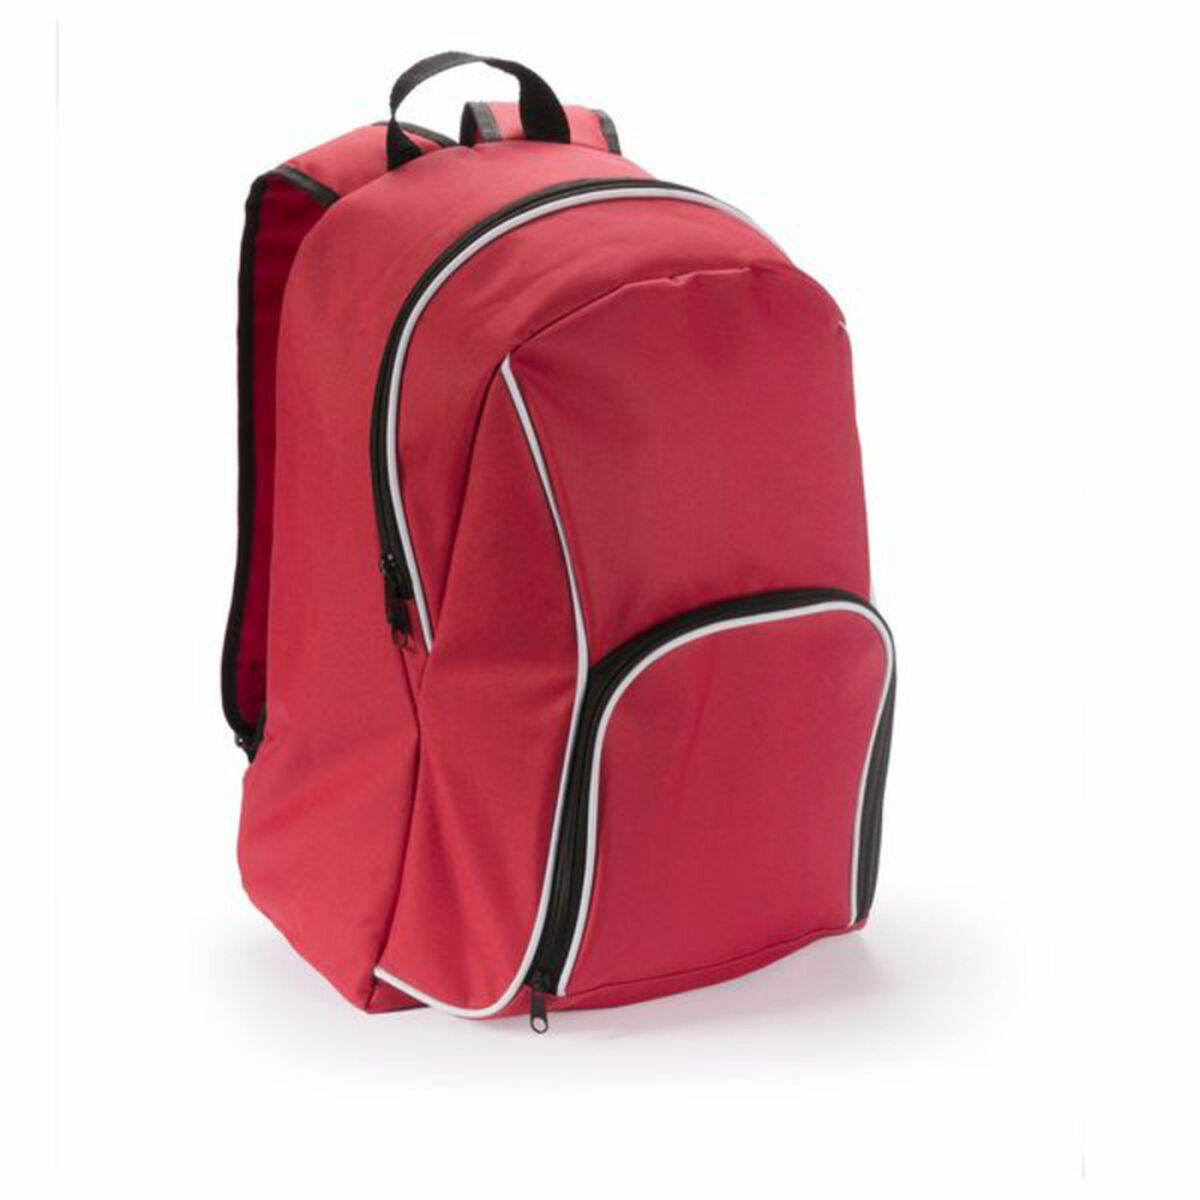 Multipurpose Backpack 144735